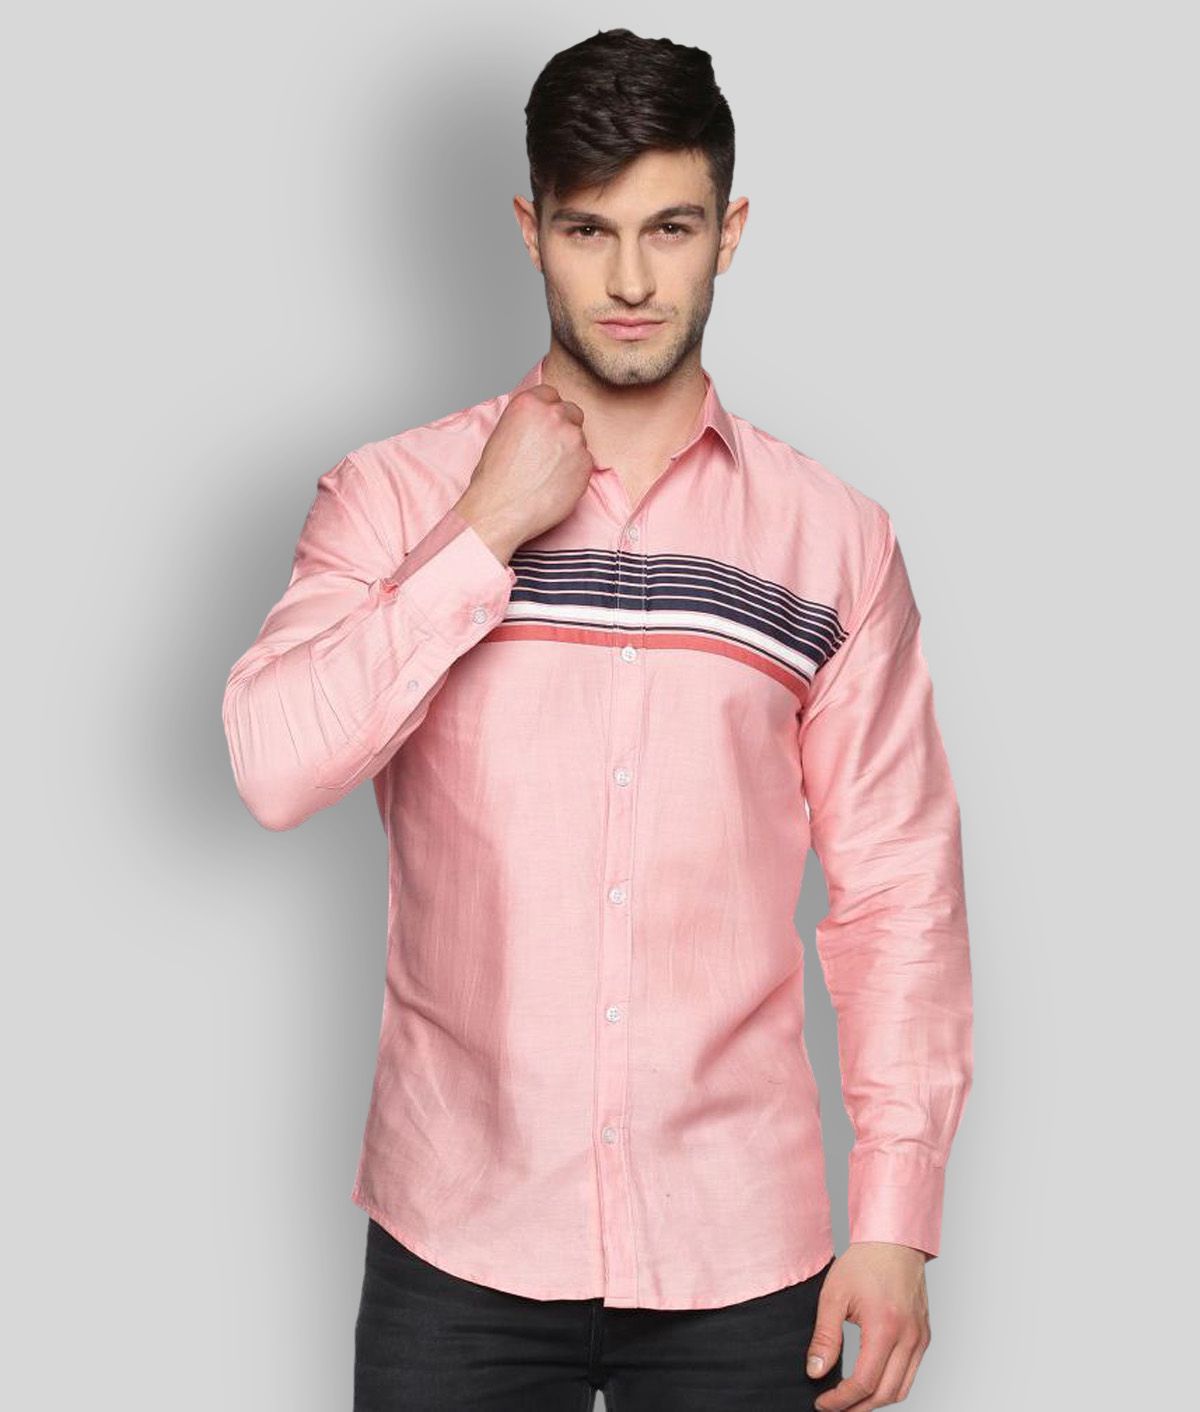 YHA - Peach 100% Cotton Regular Fit Men's Casual Shirt ( Pack of 1 )